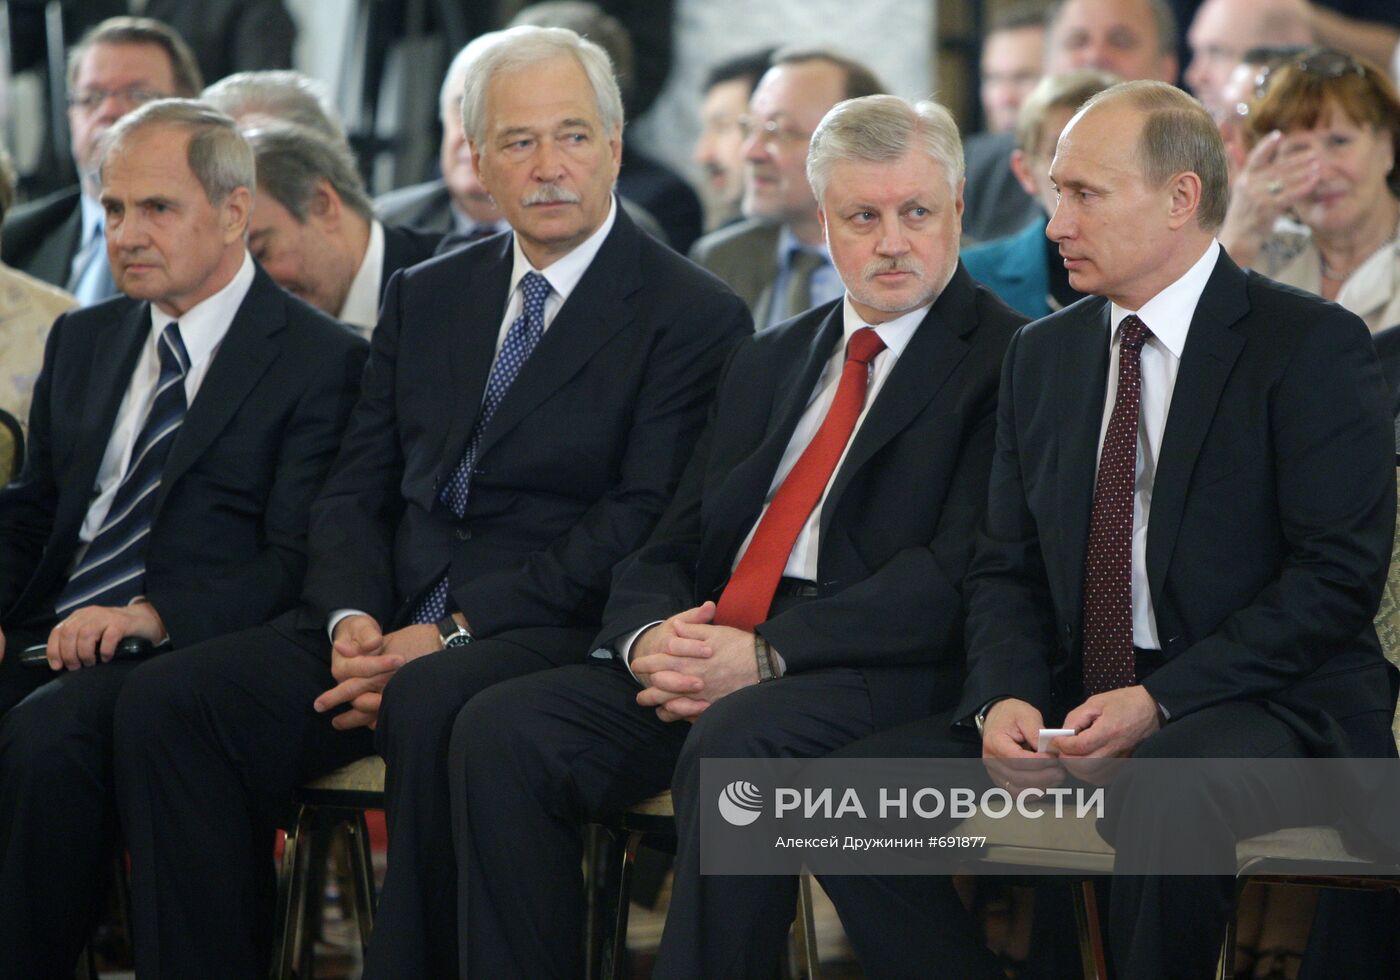 Владимир Путин, Сергей Миронов, Борис Грызлов, Валерий Зорькин